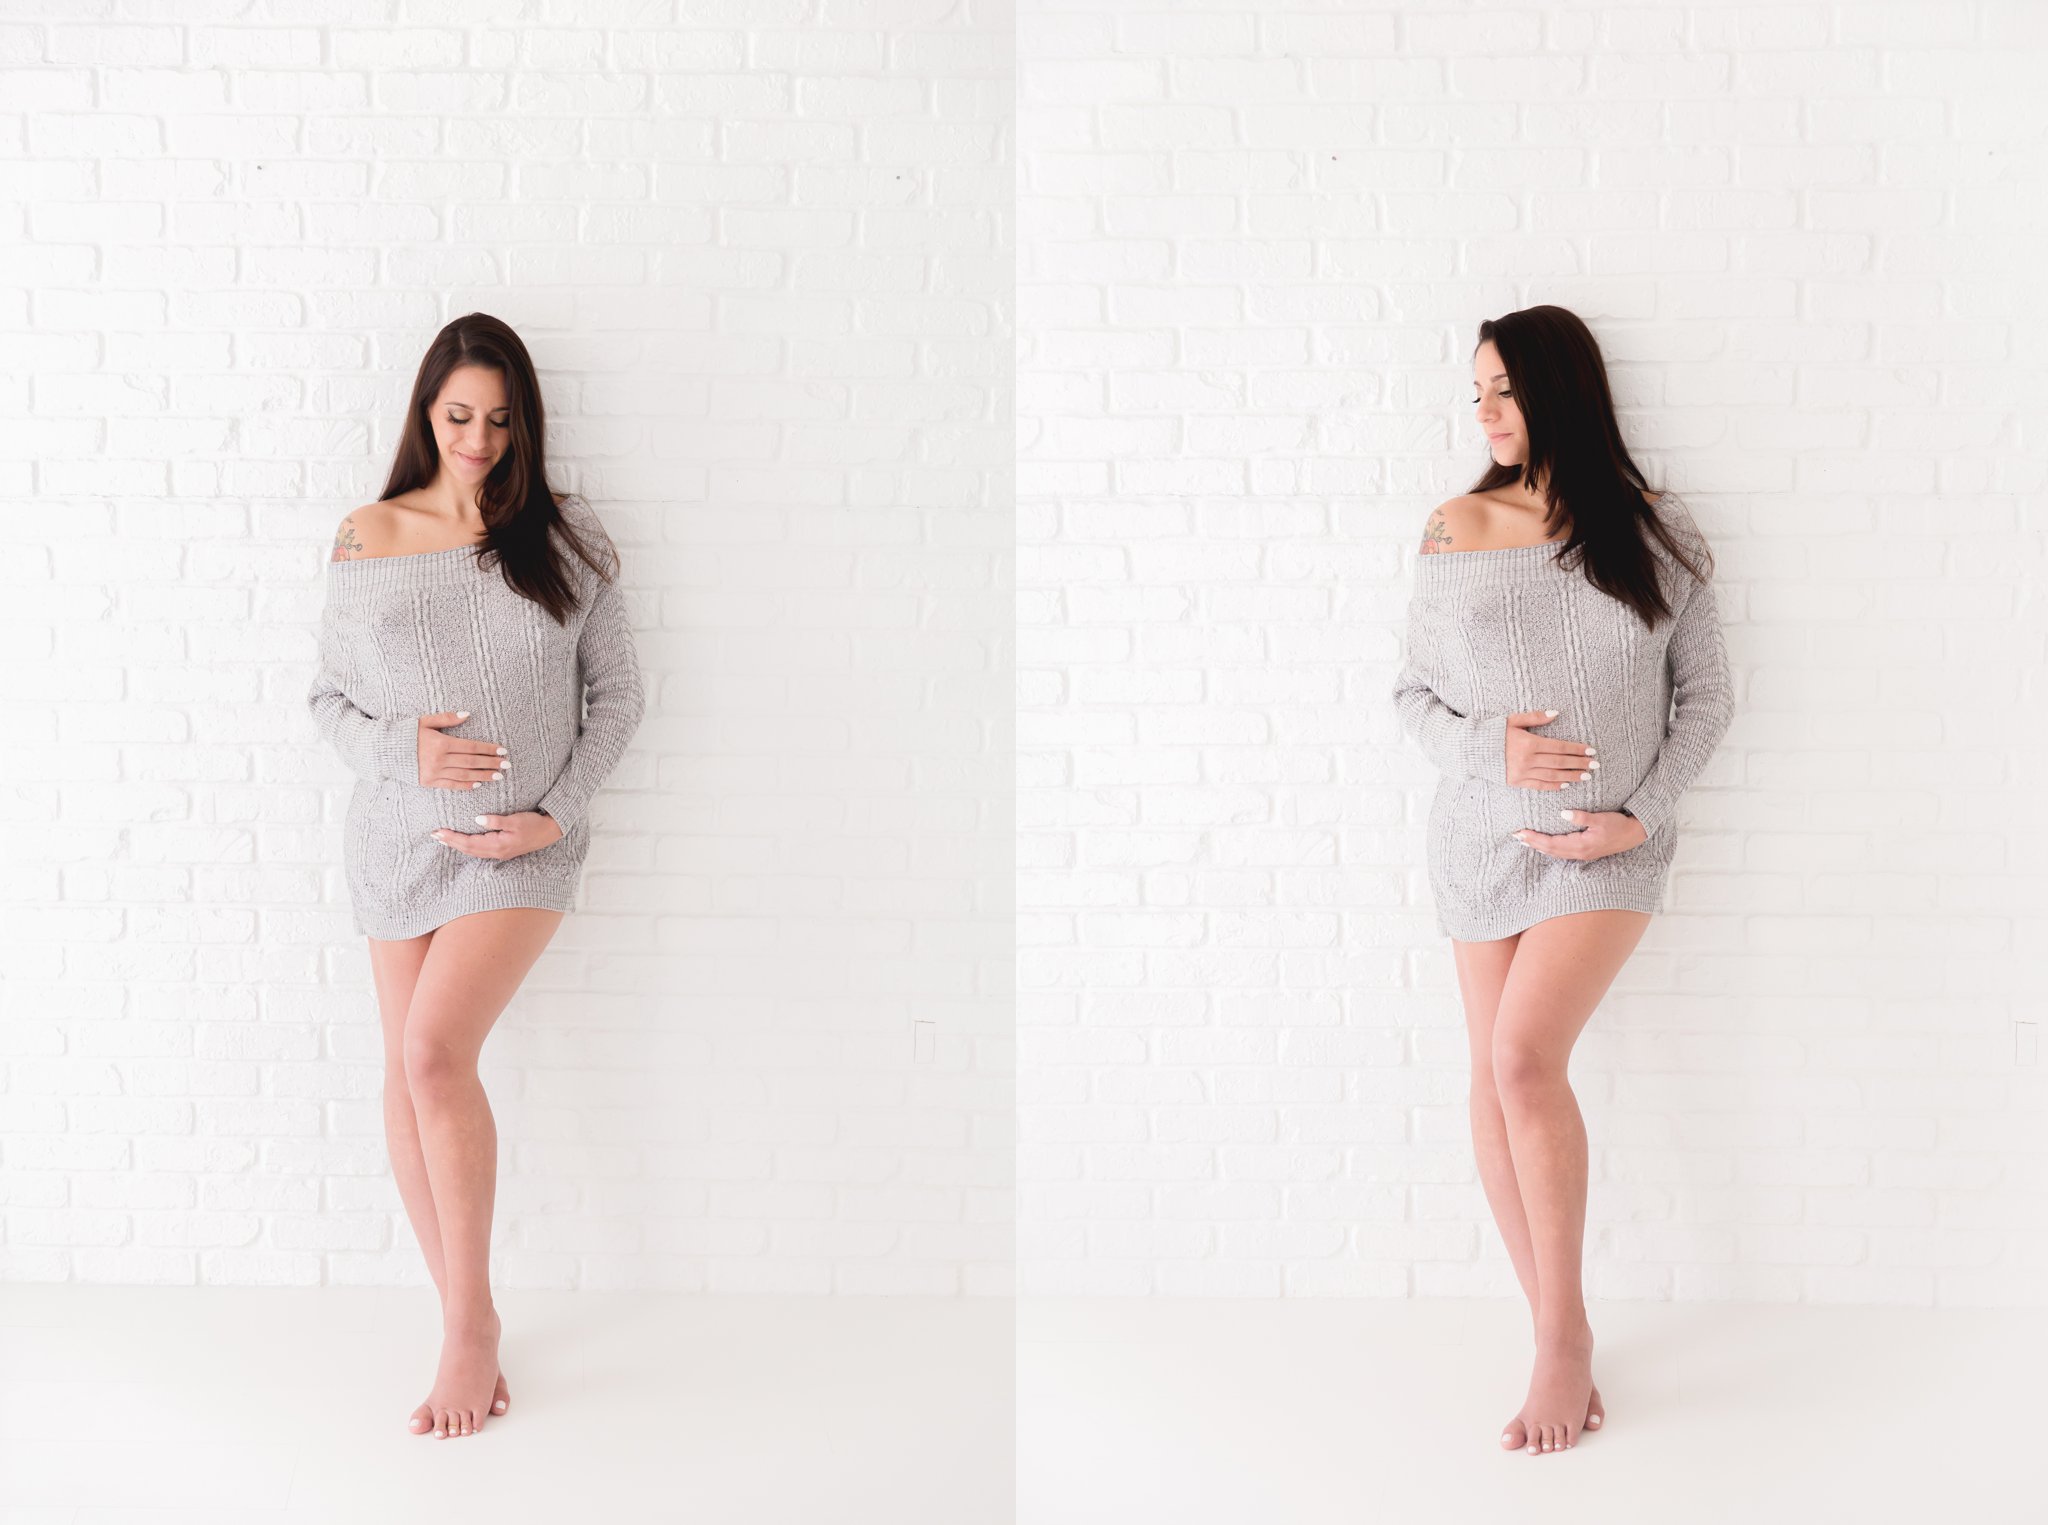 Maternity model wearing grey sweater leaning on brick wall backdrop.